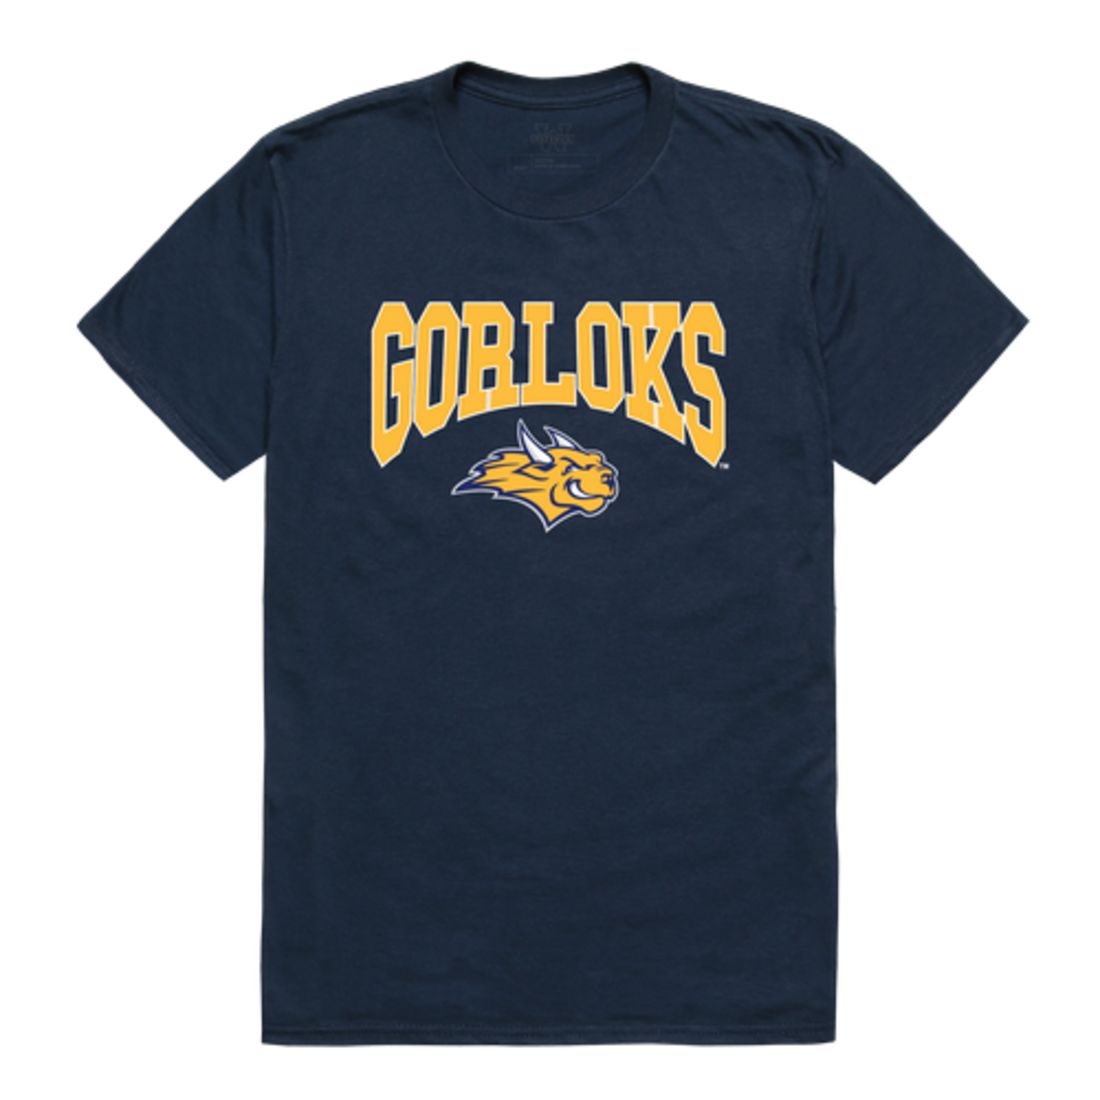 Webster University Gorlocks Athletic T-Shirt Tee